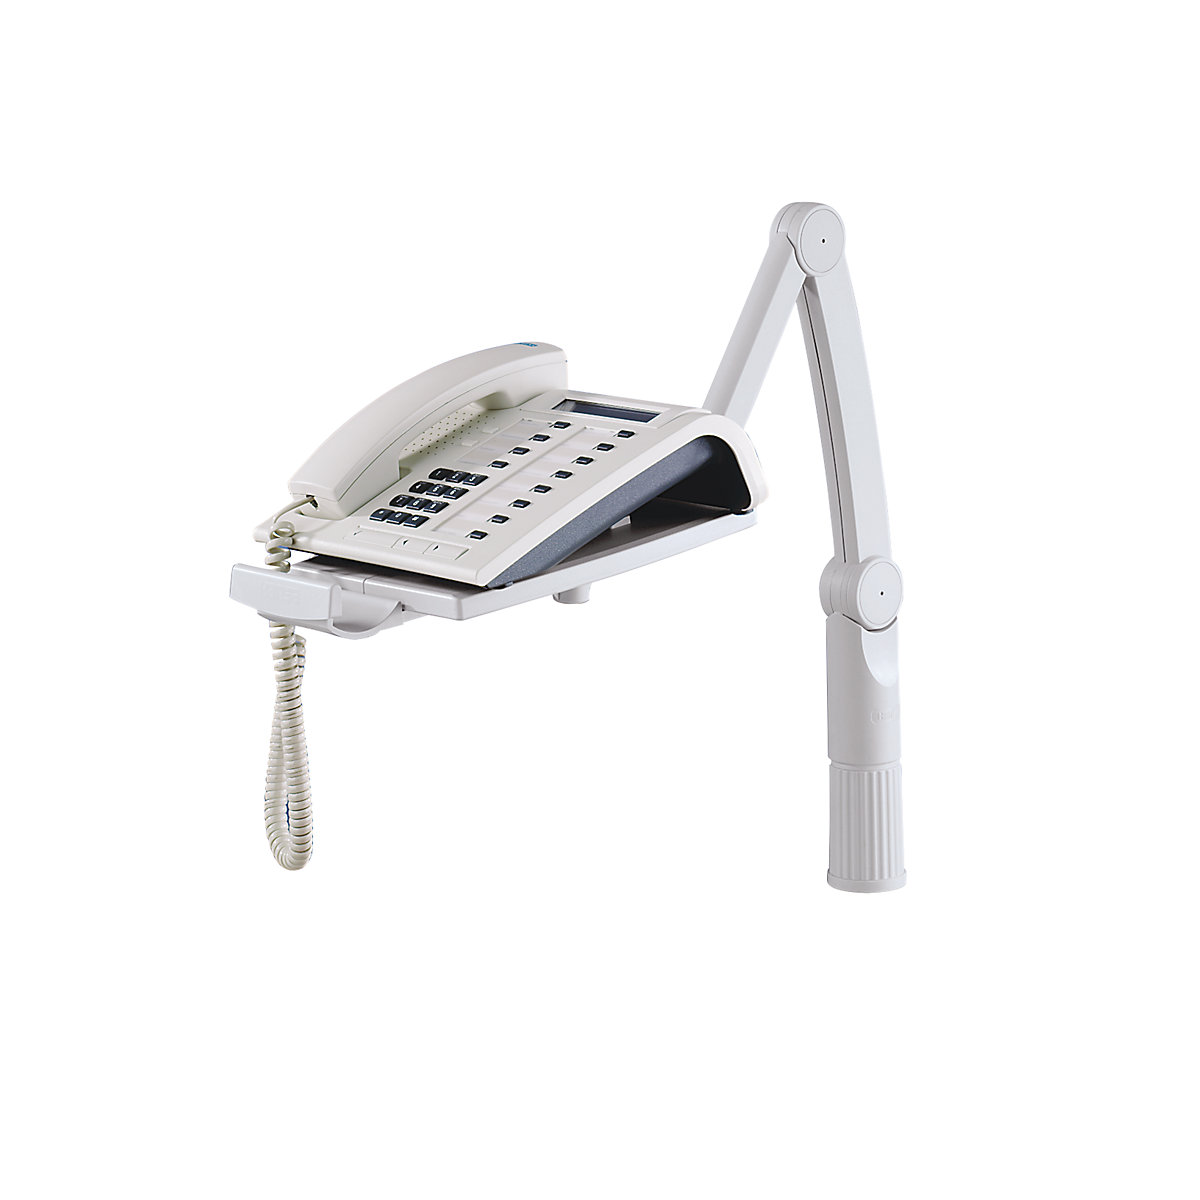 Telephone swivel arm, rotates 360°, light grey-1